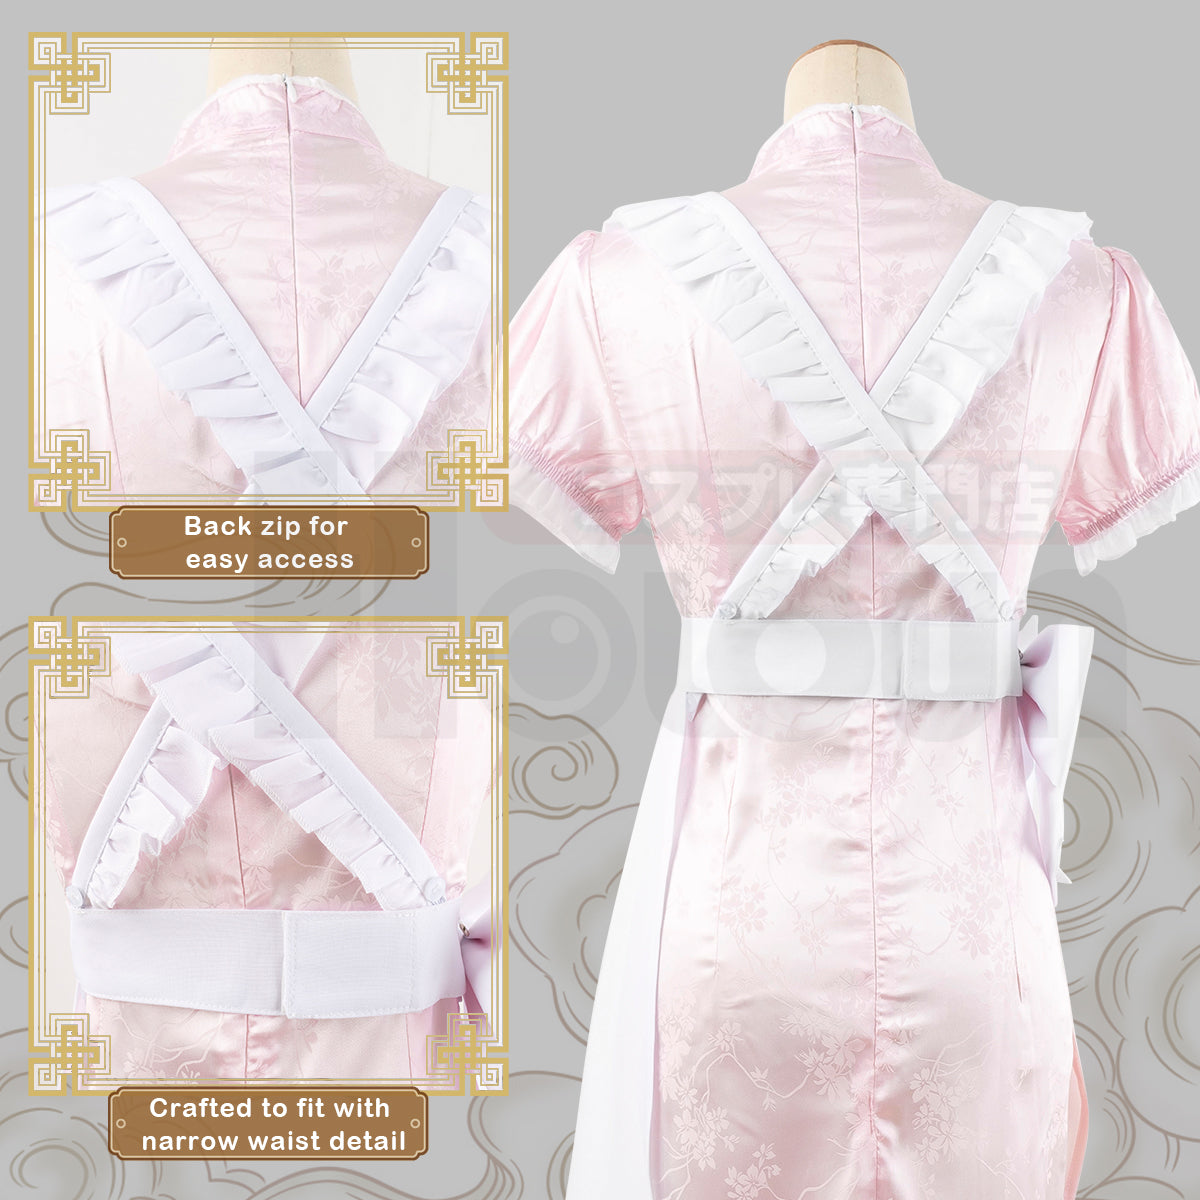 HOLOUN Lolita Maid Dress Skirt China Costume Cute Cheongsam Cafe Uniform Apron Pink Color Short Sleeve Daily Wear Gift